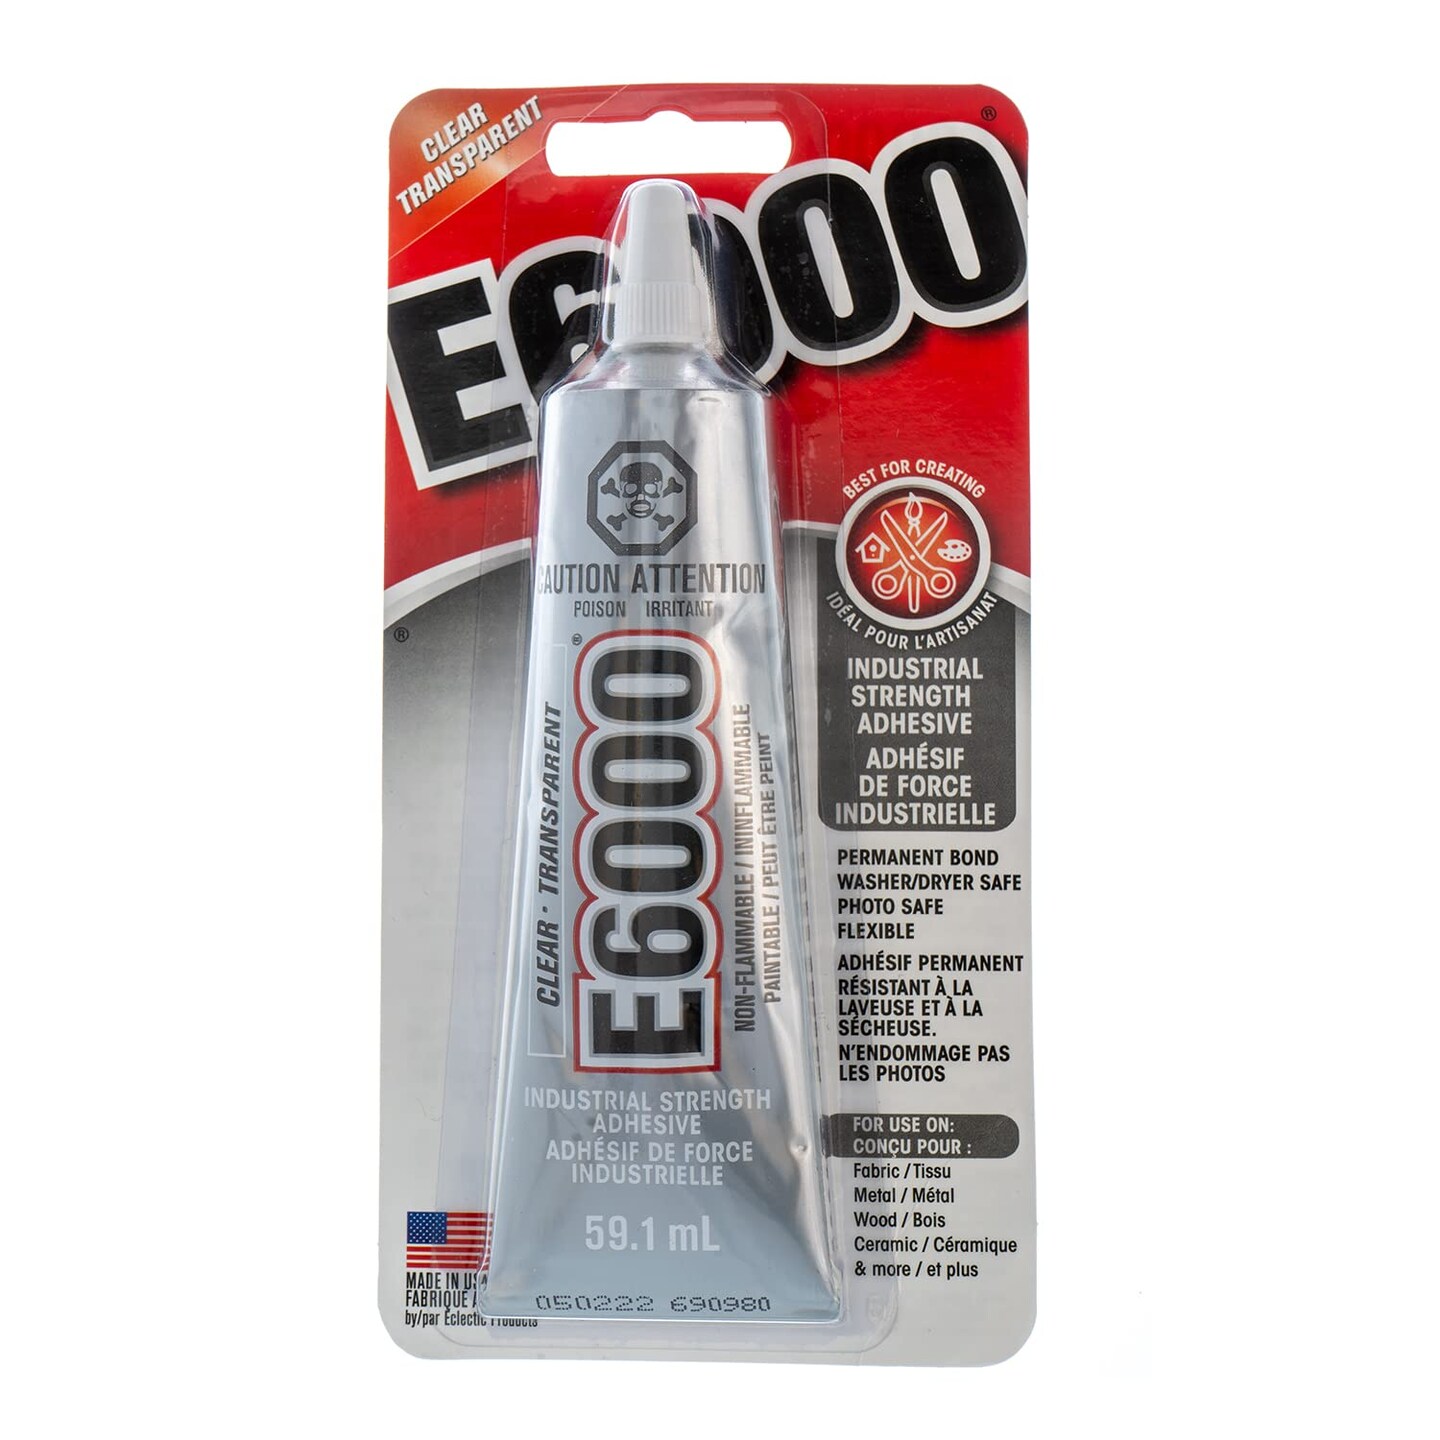 E-6000 Glue Clear Tube, Adhesive for Crafts, Glue for Craft, Multi  Purpose Glue, Transparent